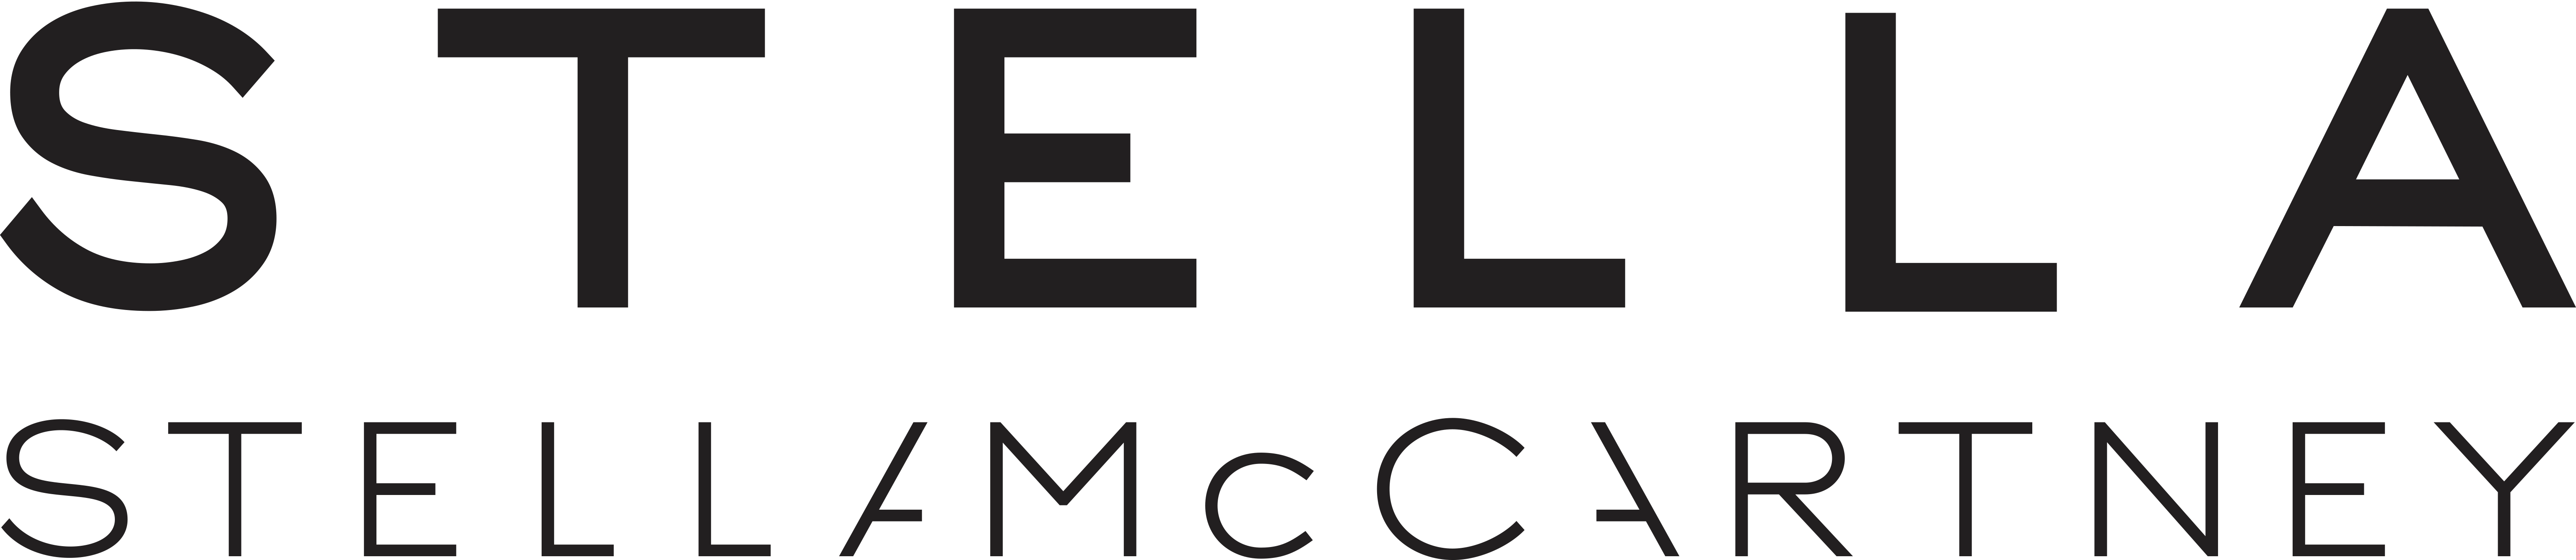 stella mccartney logo